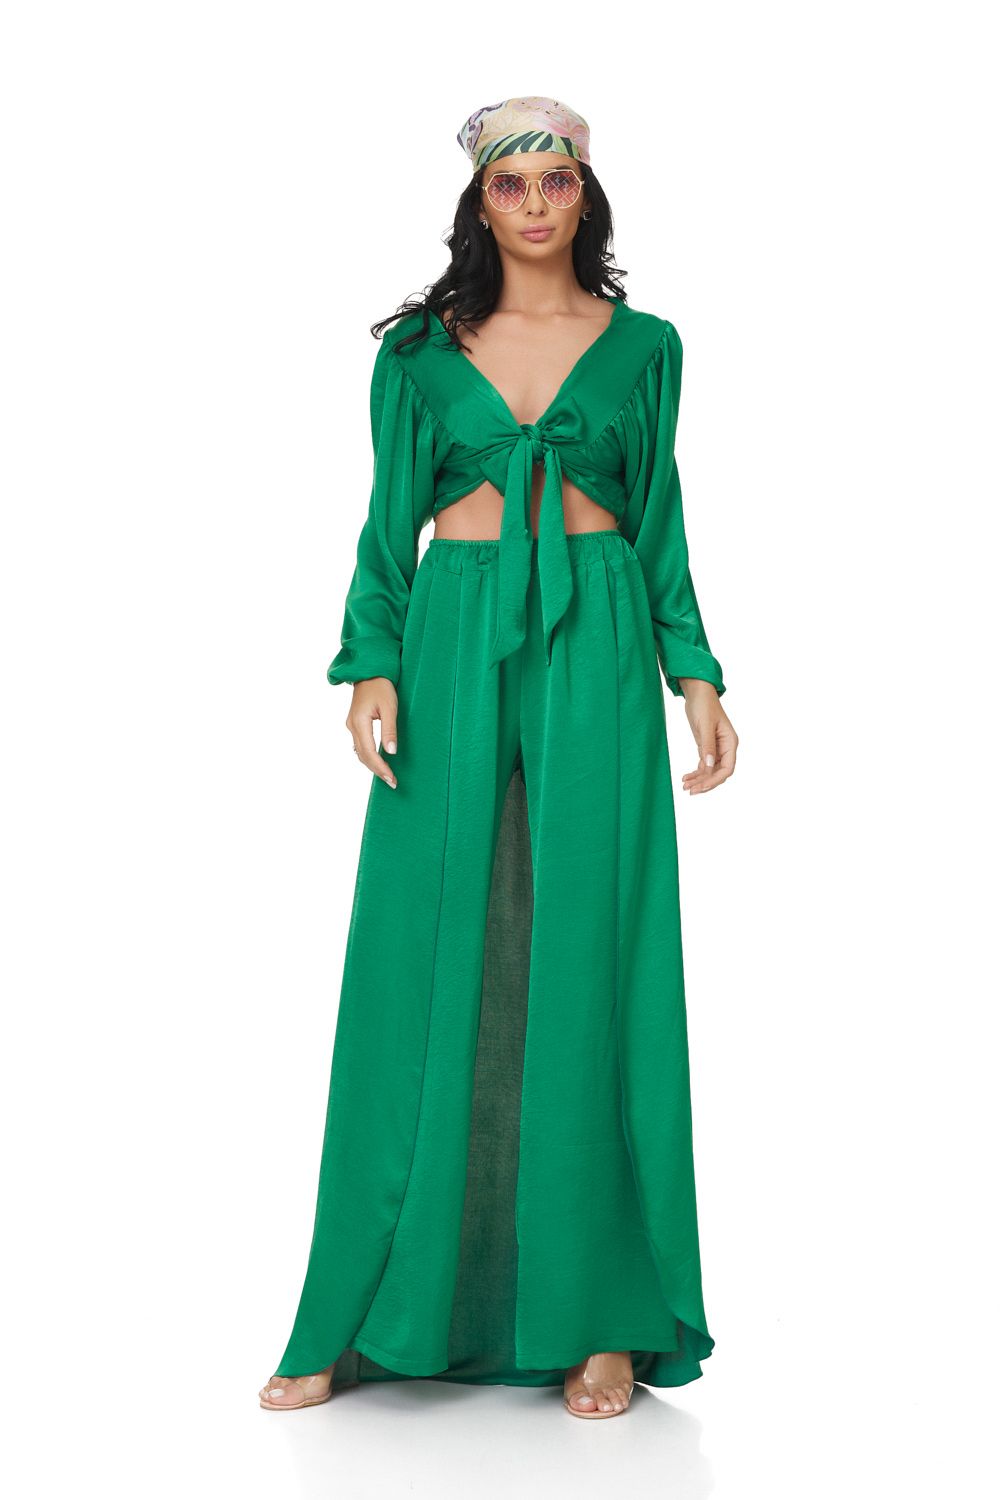 Green casual women's suit Poline Bogas